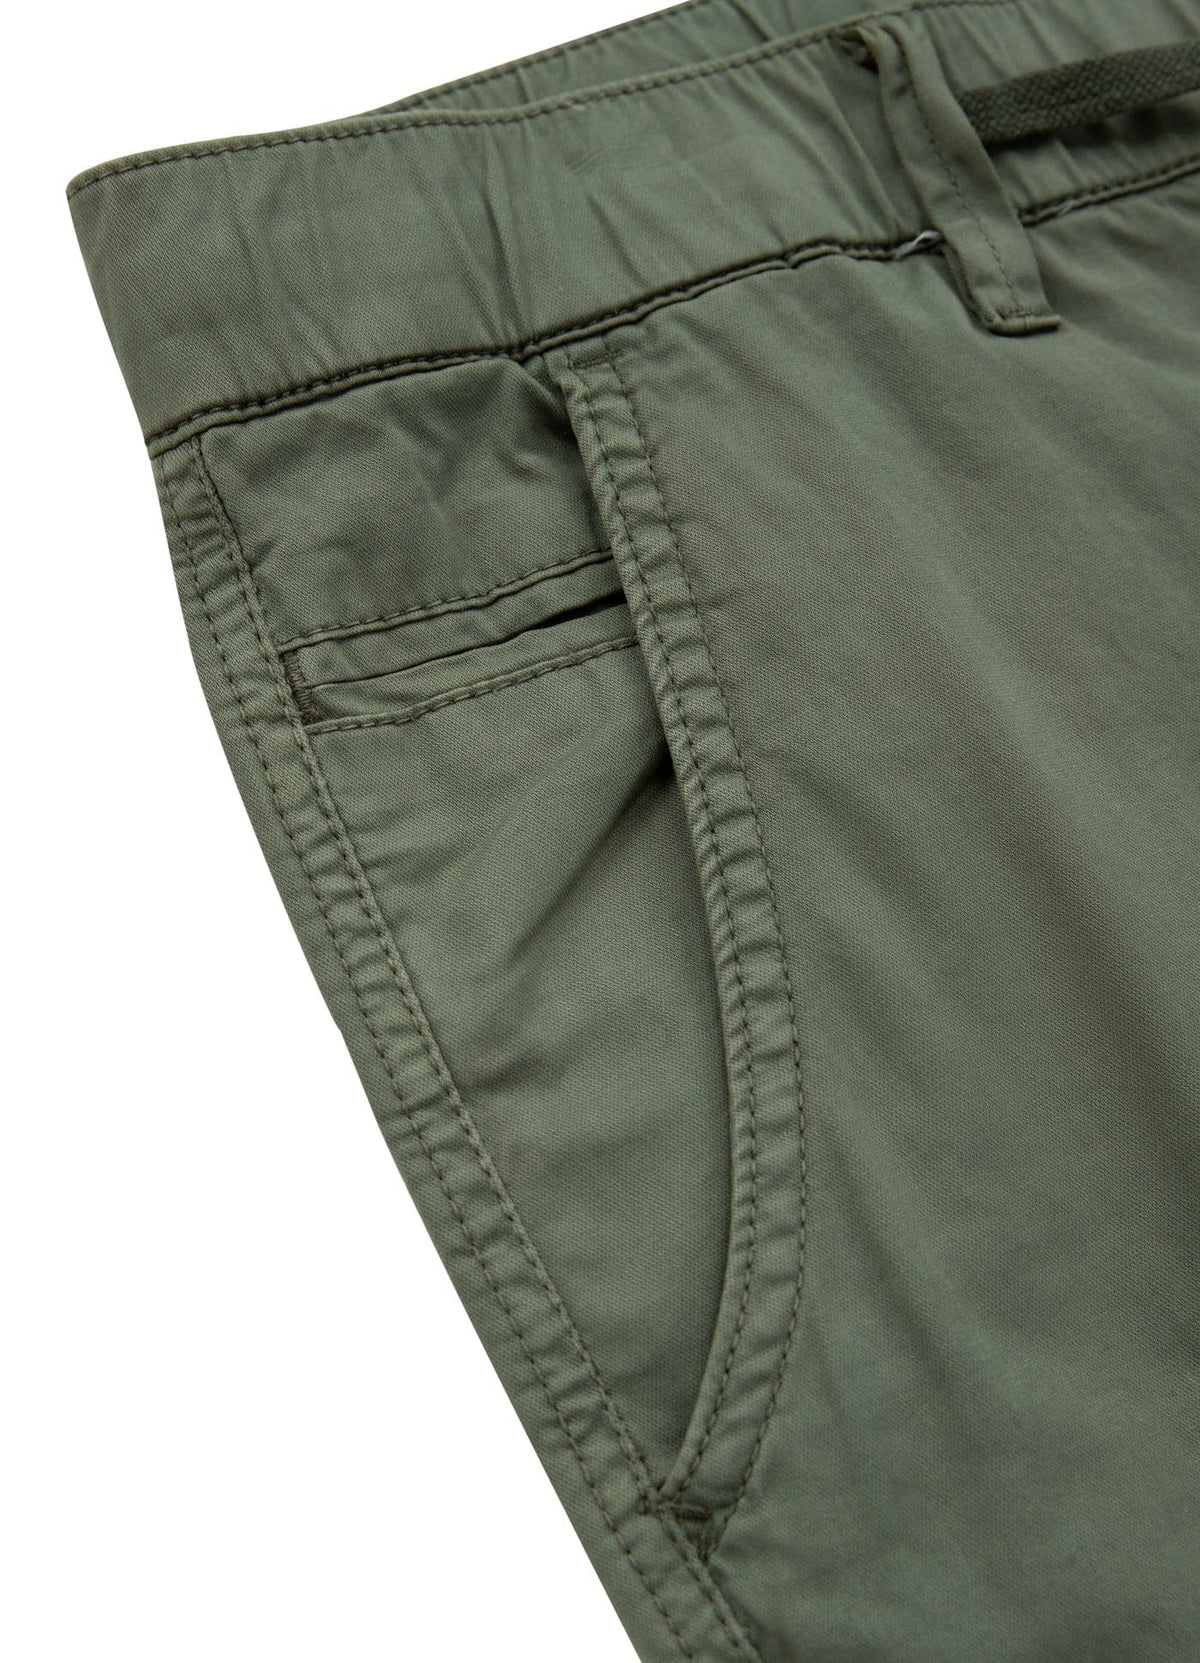 SKYLINE Olive Cargo Shorts - Pitbullstore.eu